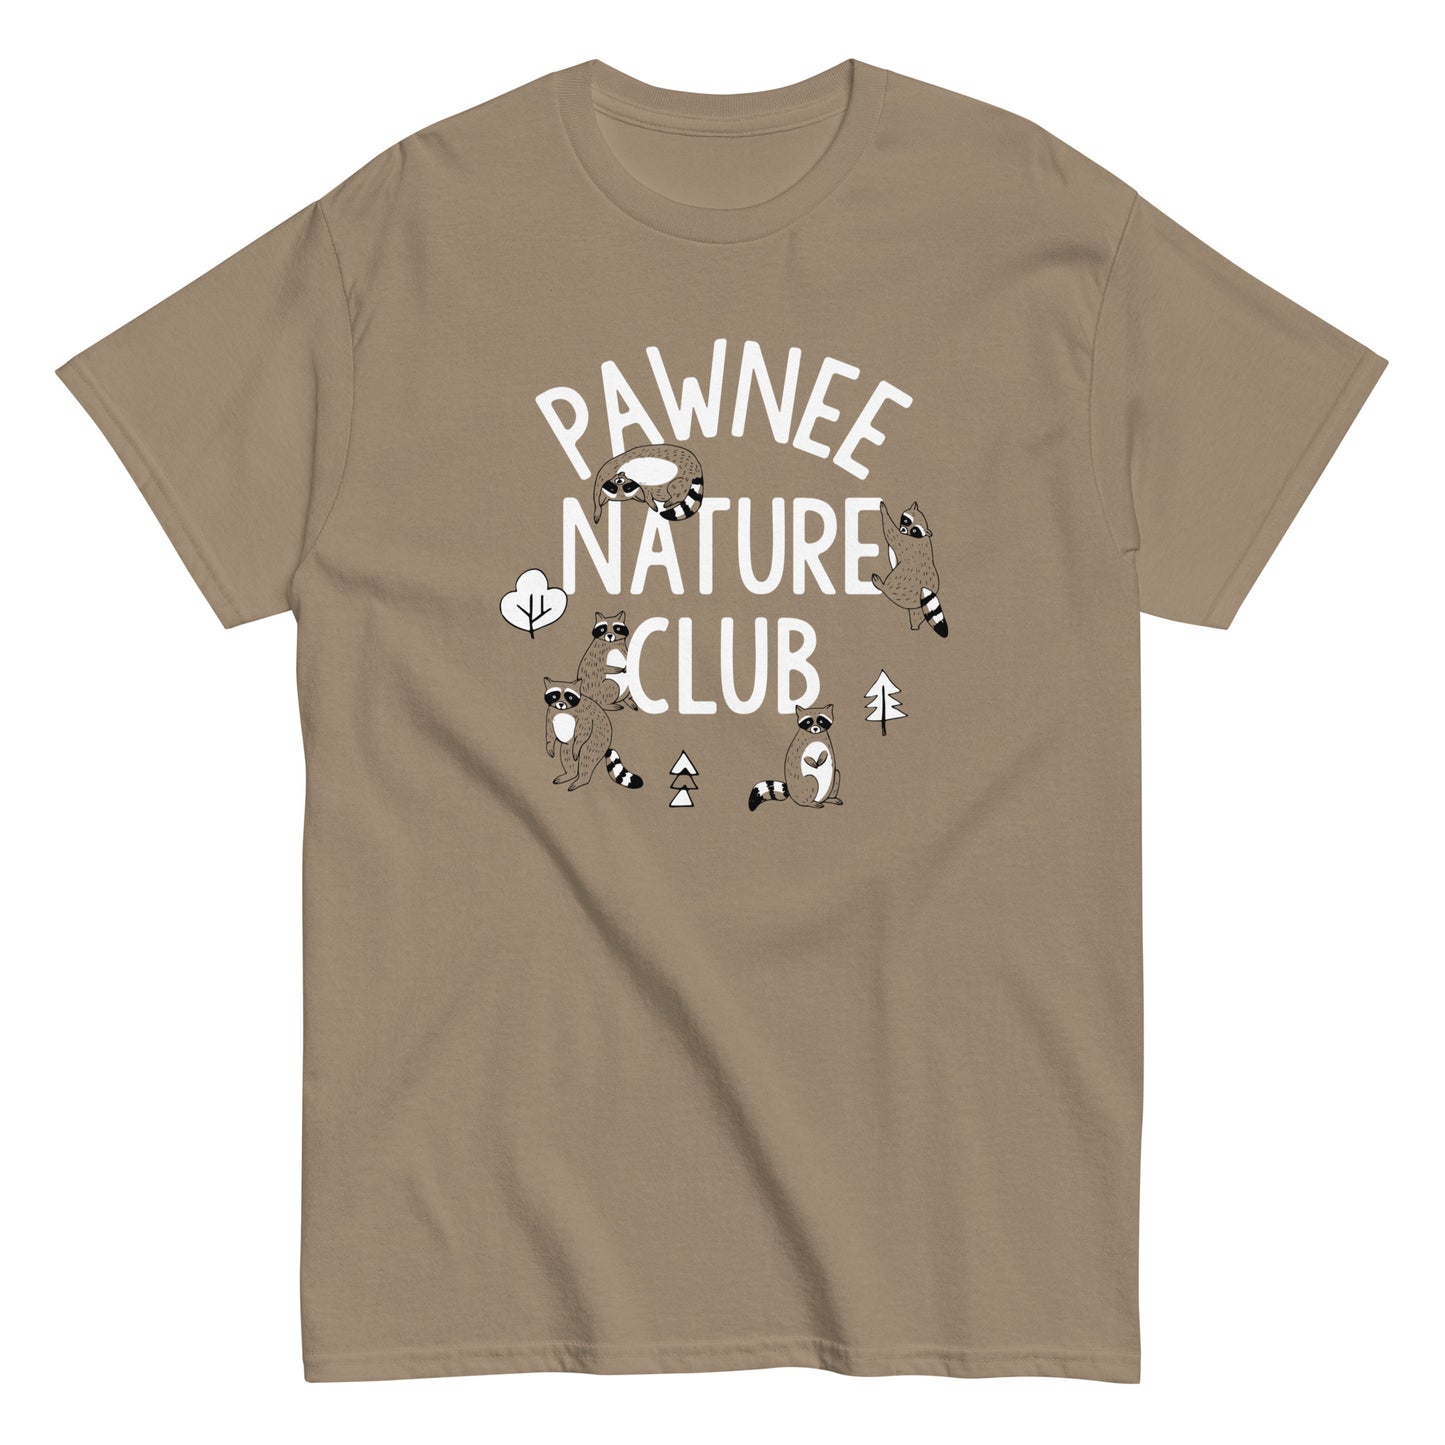 Pawnee Nature Club Men's Classic Tee